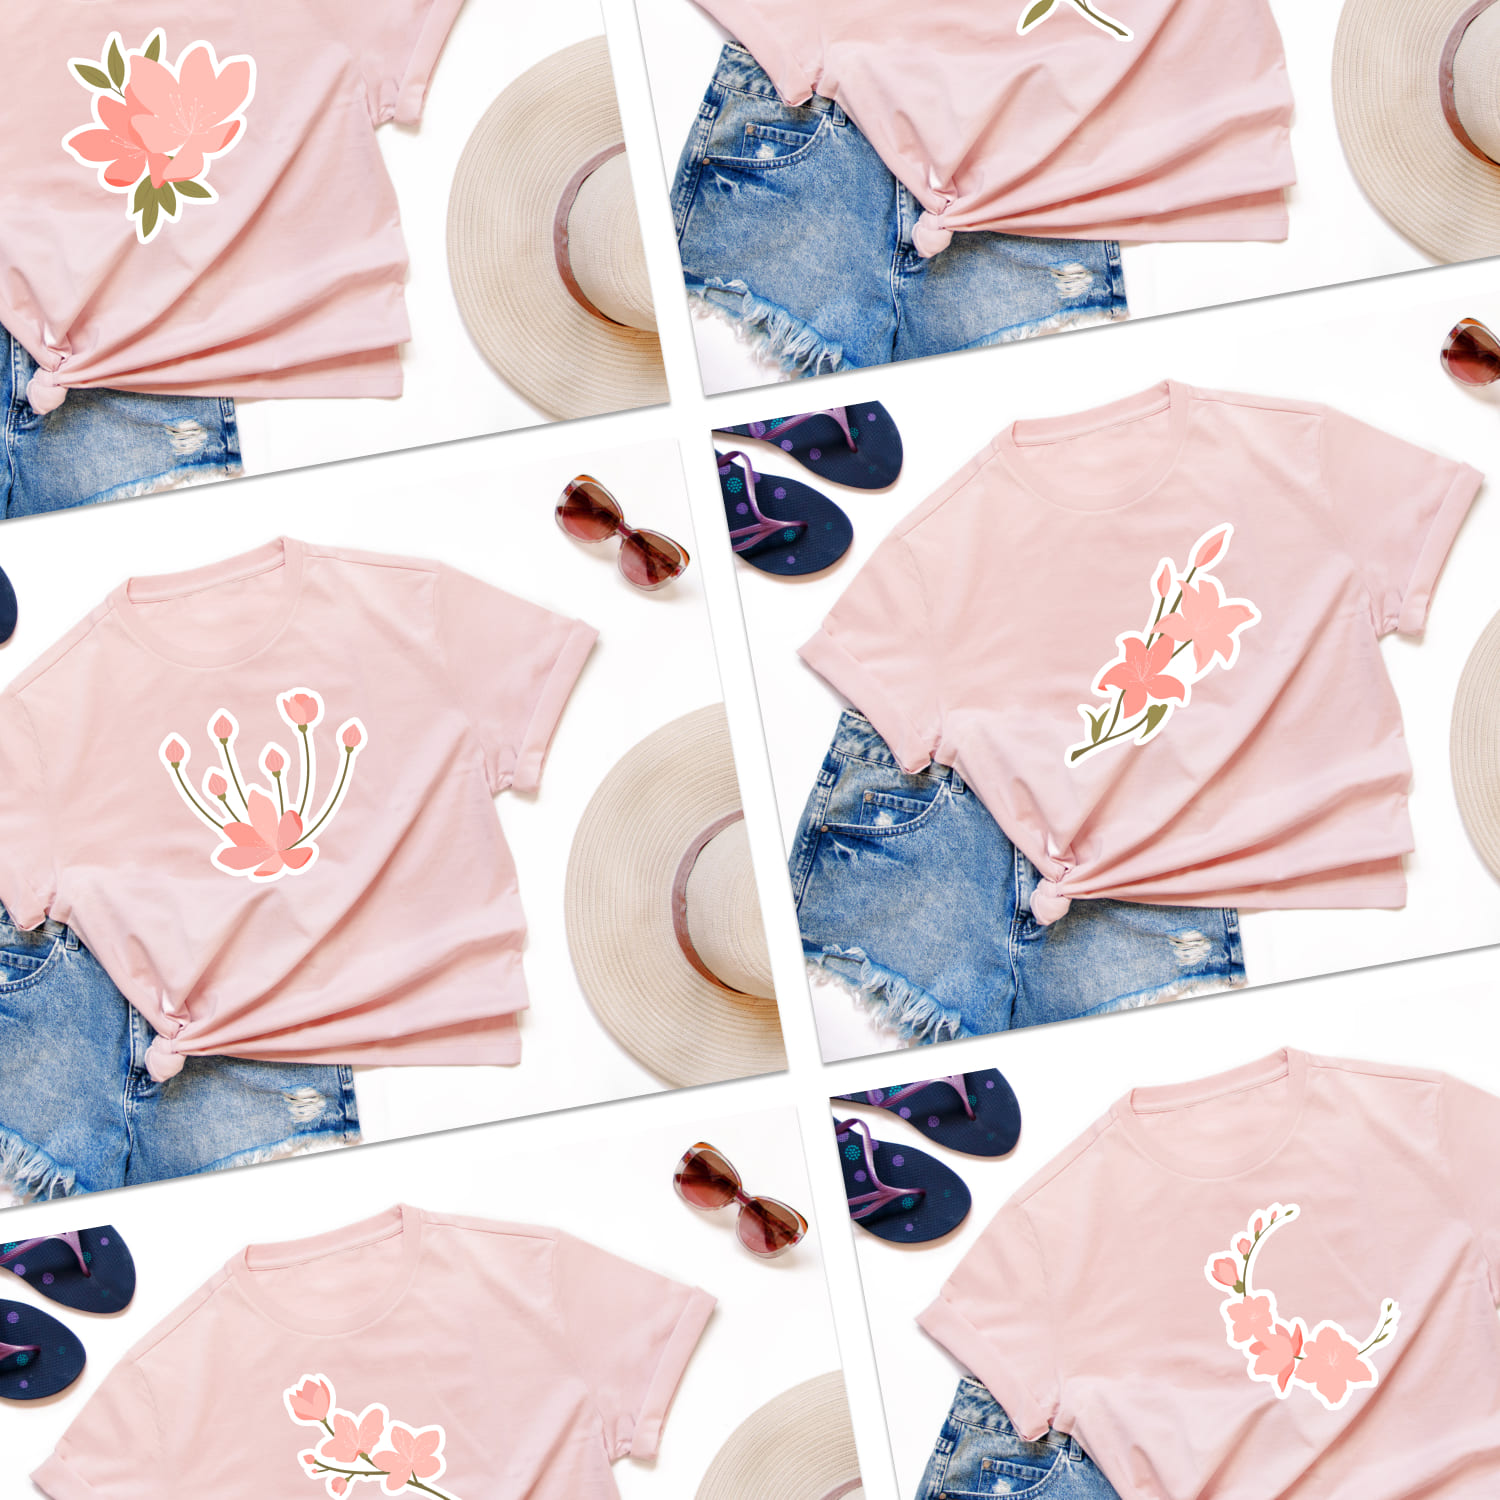 Preview cherry blossom t shirt designs.